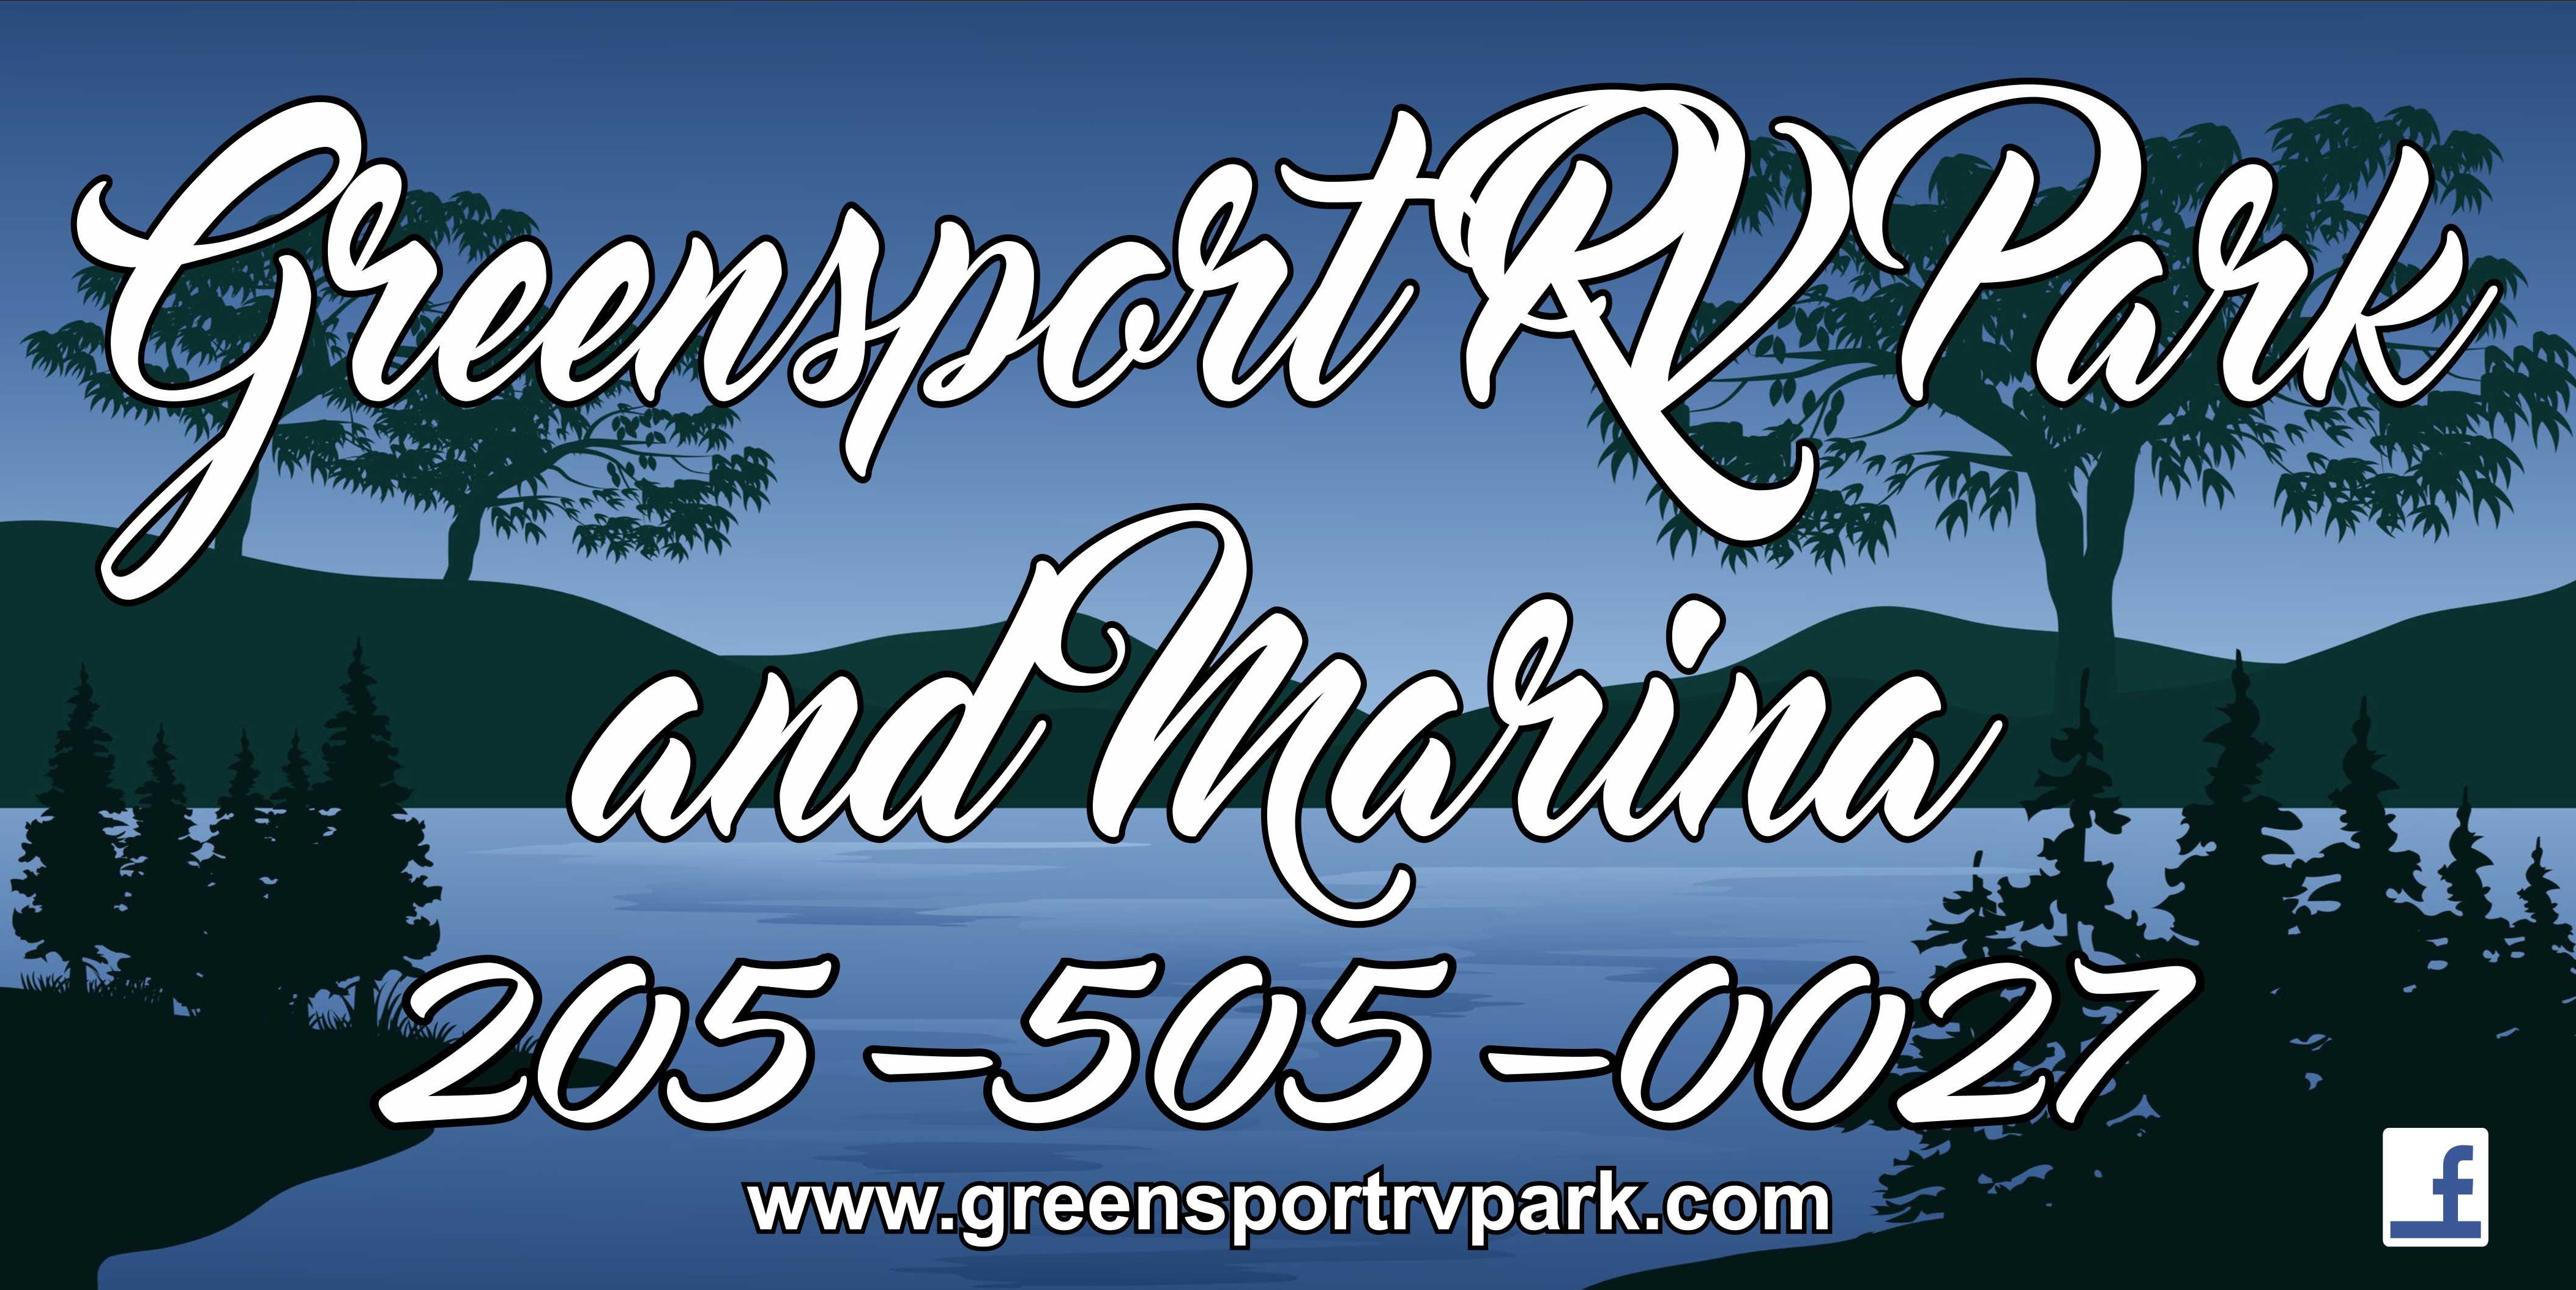 Greensport RV Park and Marina